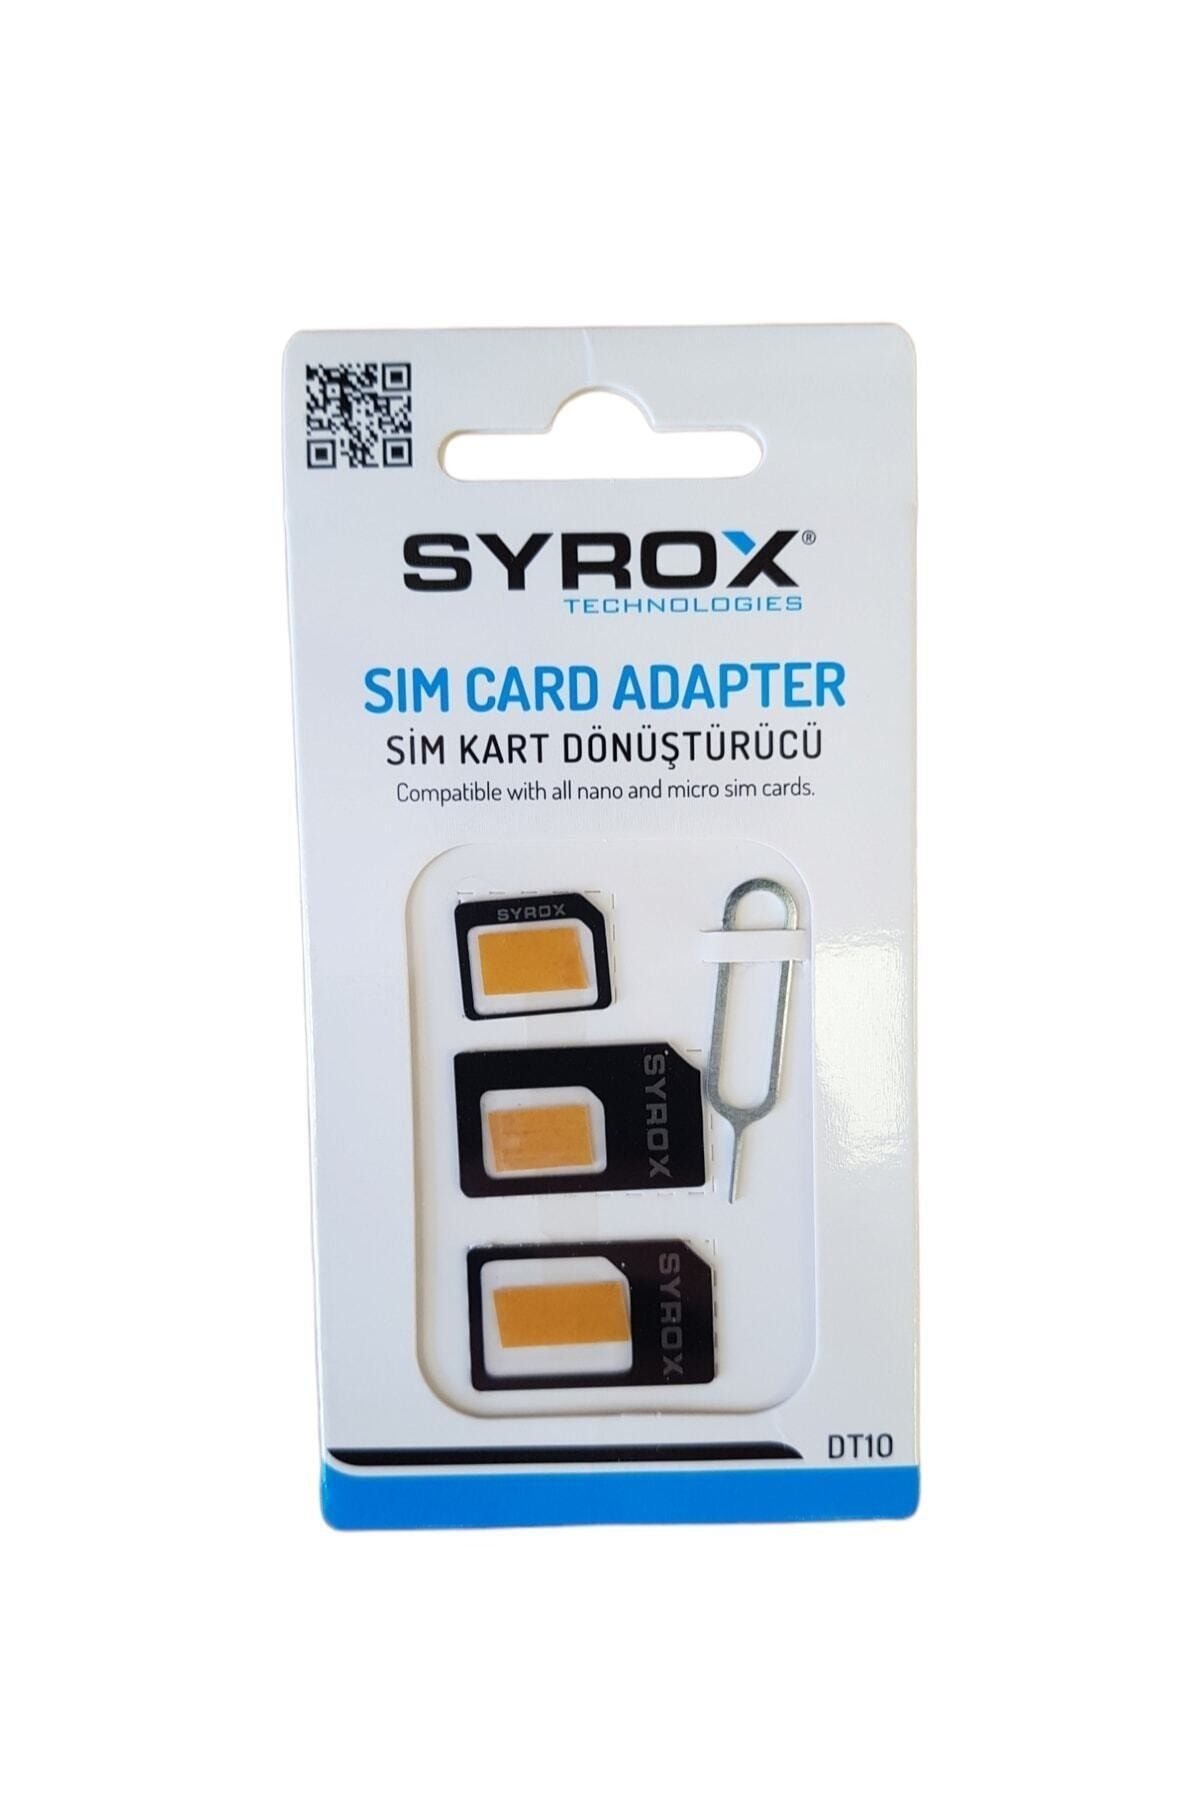 Syrox Sım Card Adapter